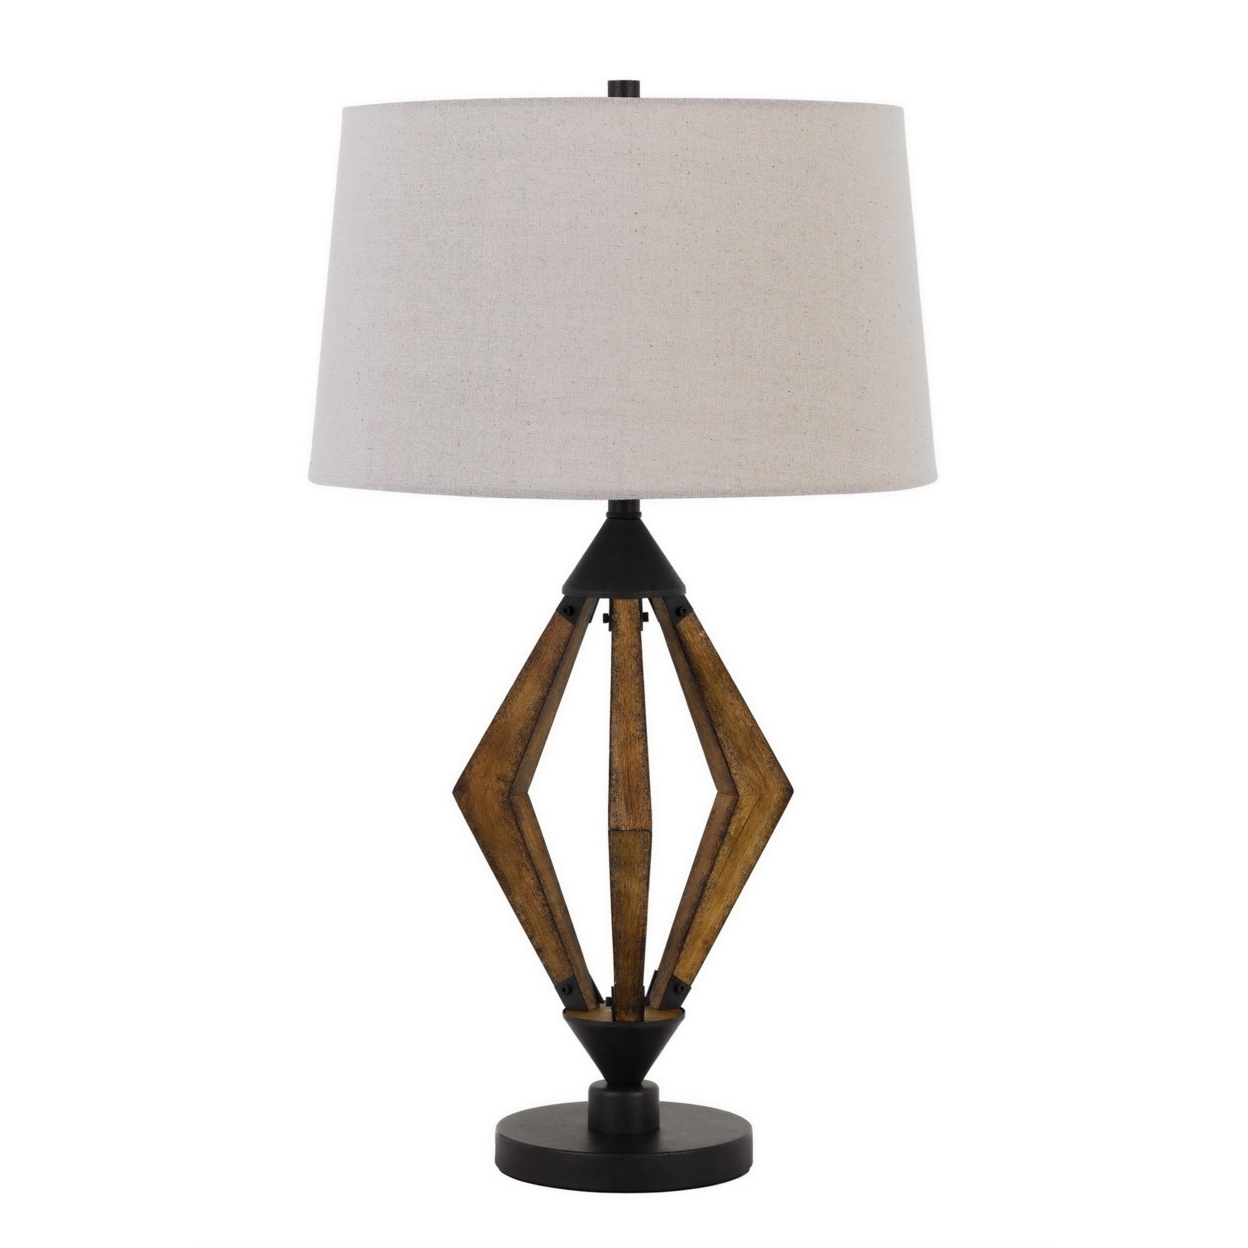 150 Watt Table Lamp With Boomerang Shaped Wooden Body, Brown And White- Saltoro Sherpi